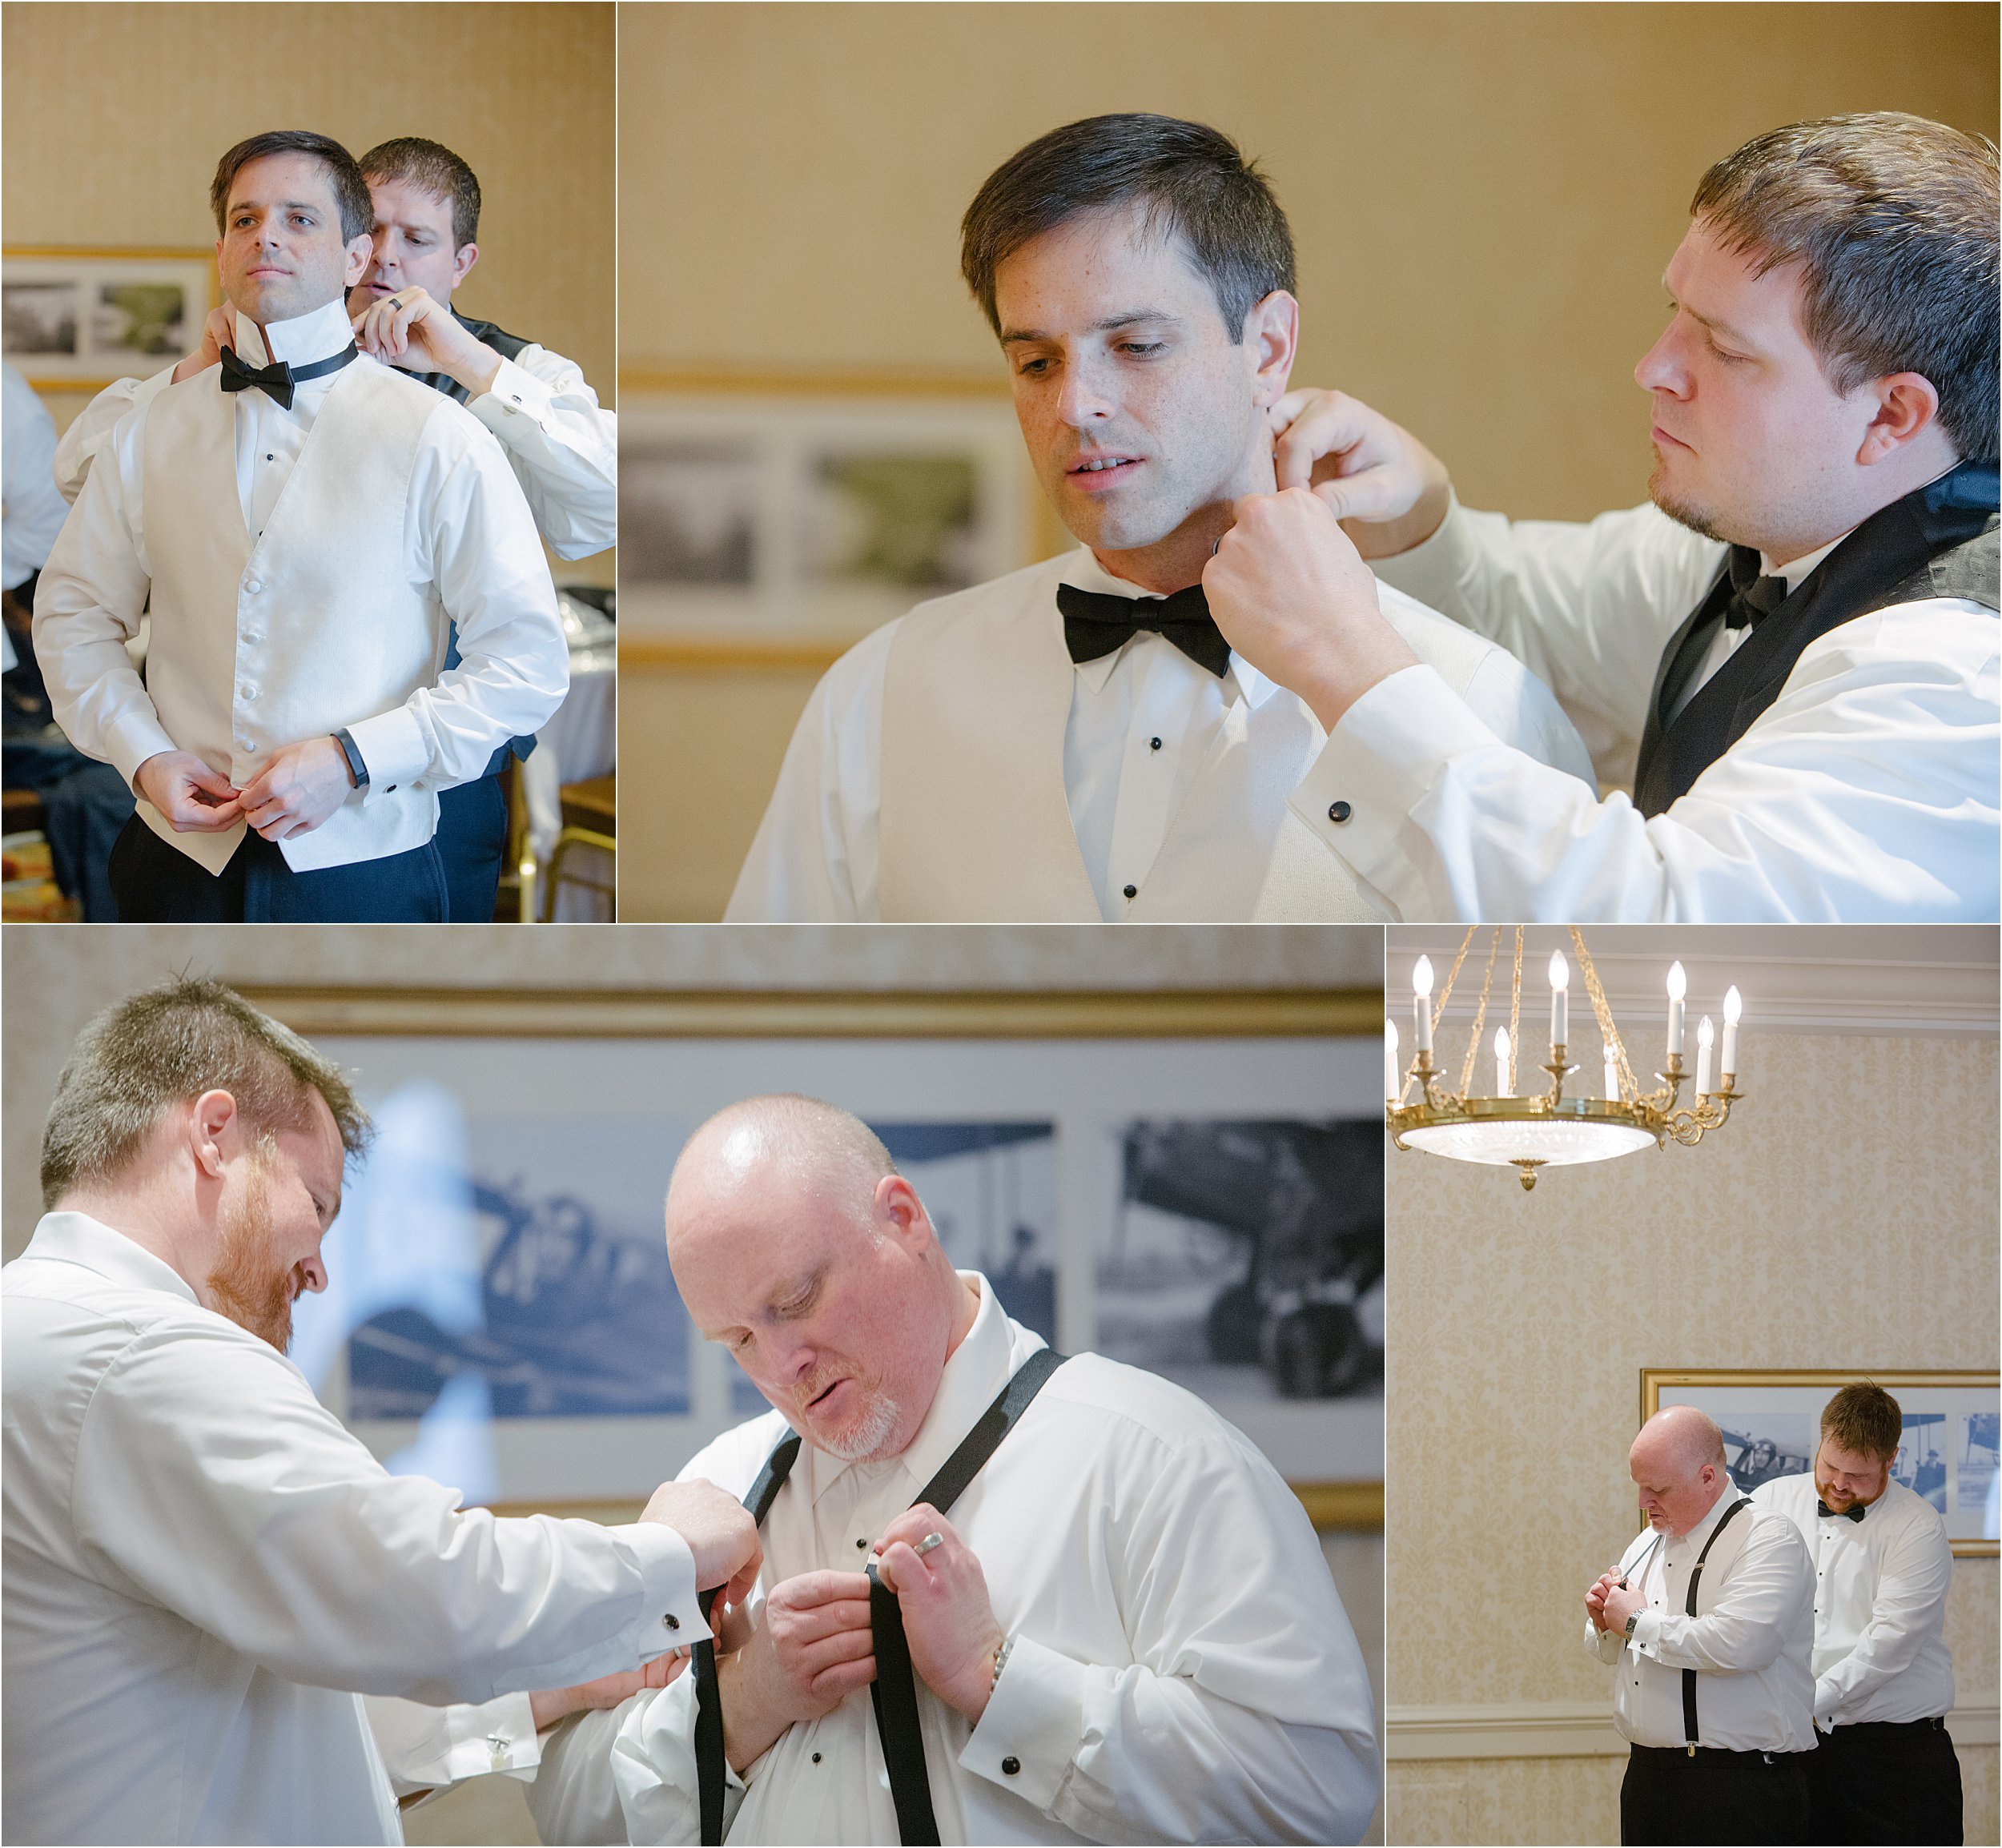 02-groom-putting-bowtie-hotel-room.JPG